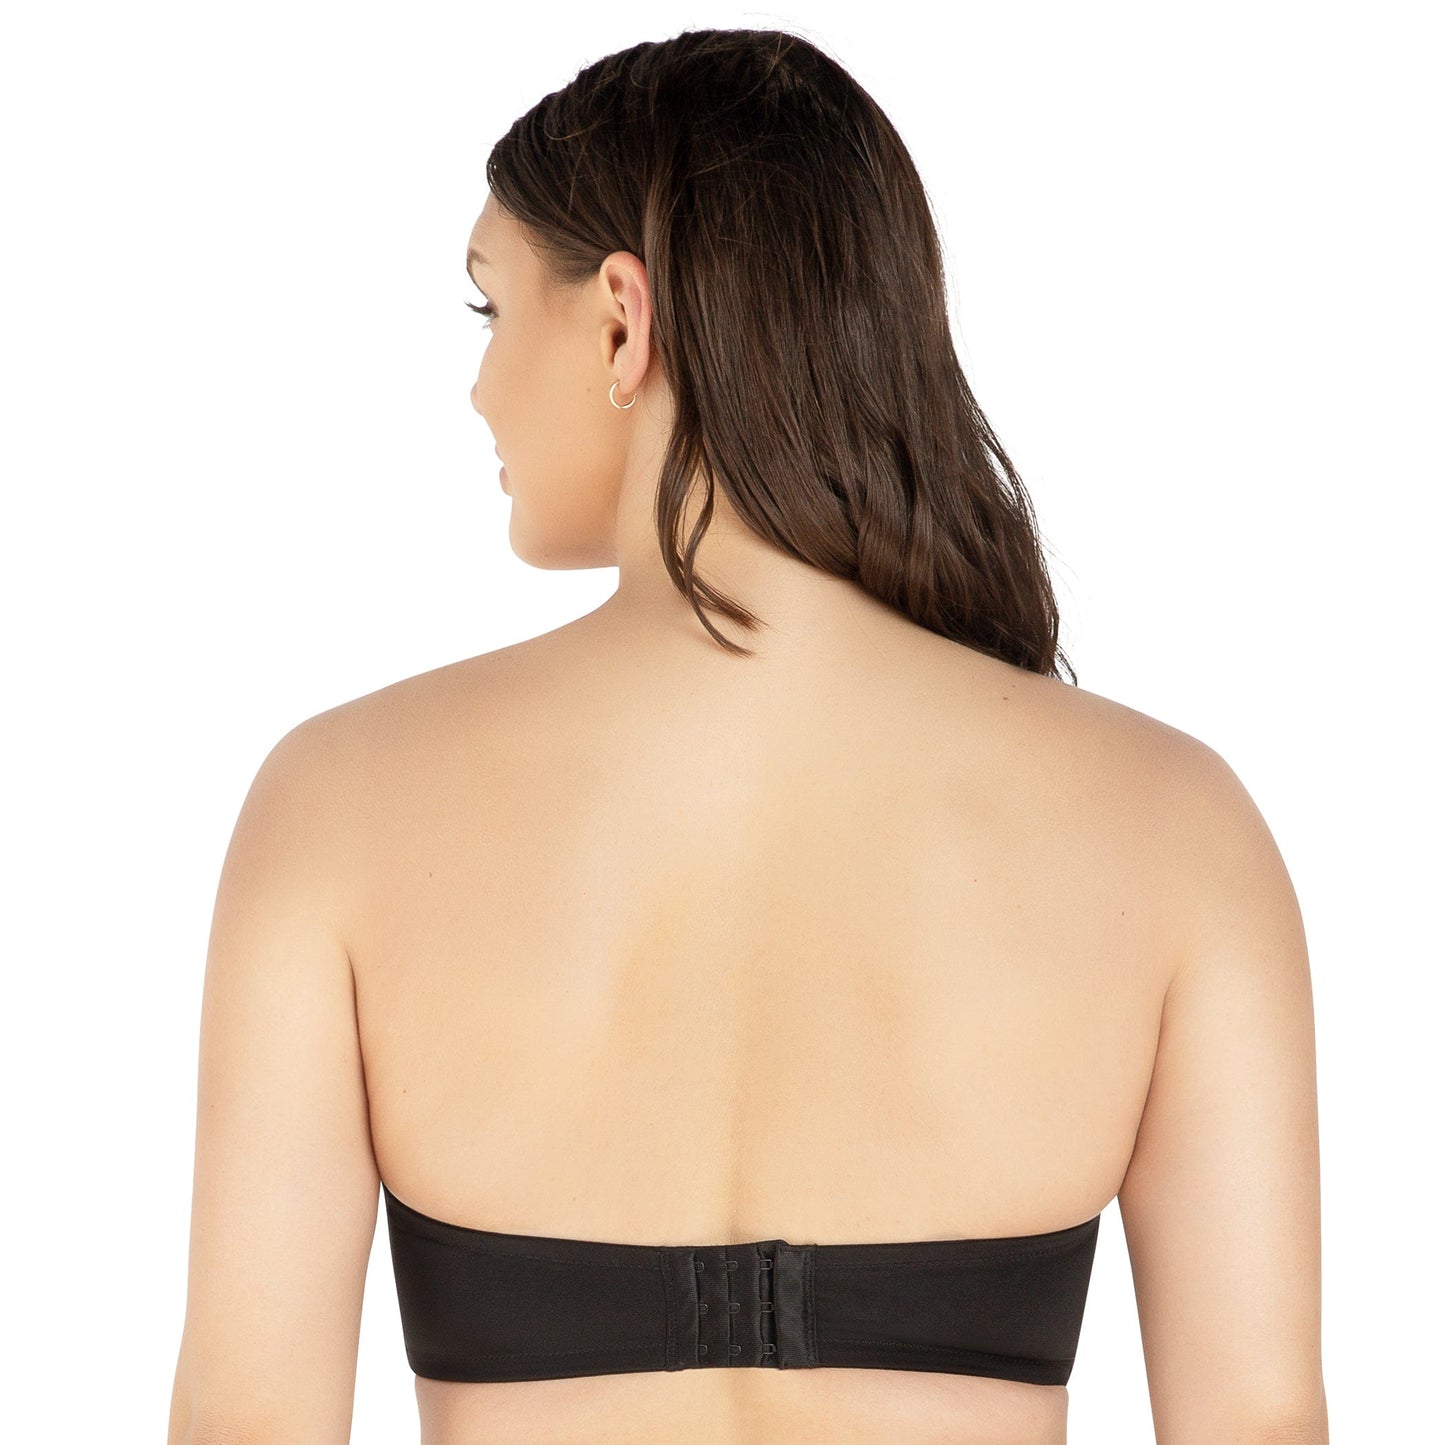 Elise Strapless Bra - Black worn by model back view